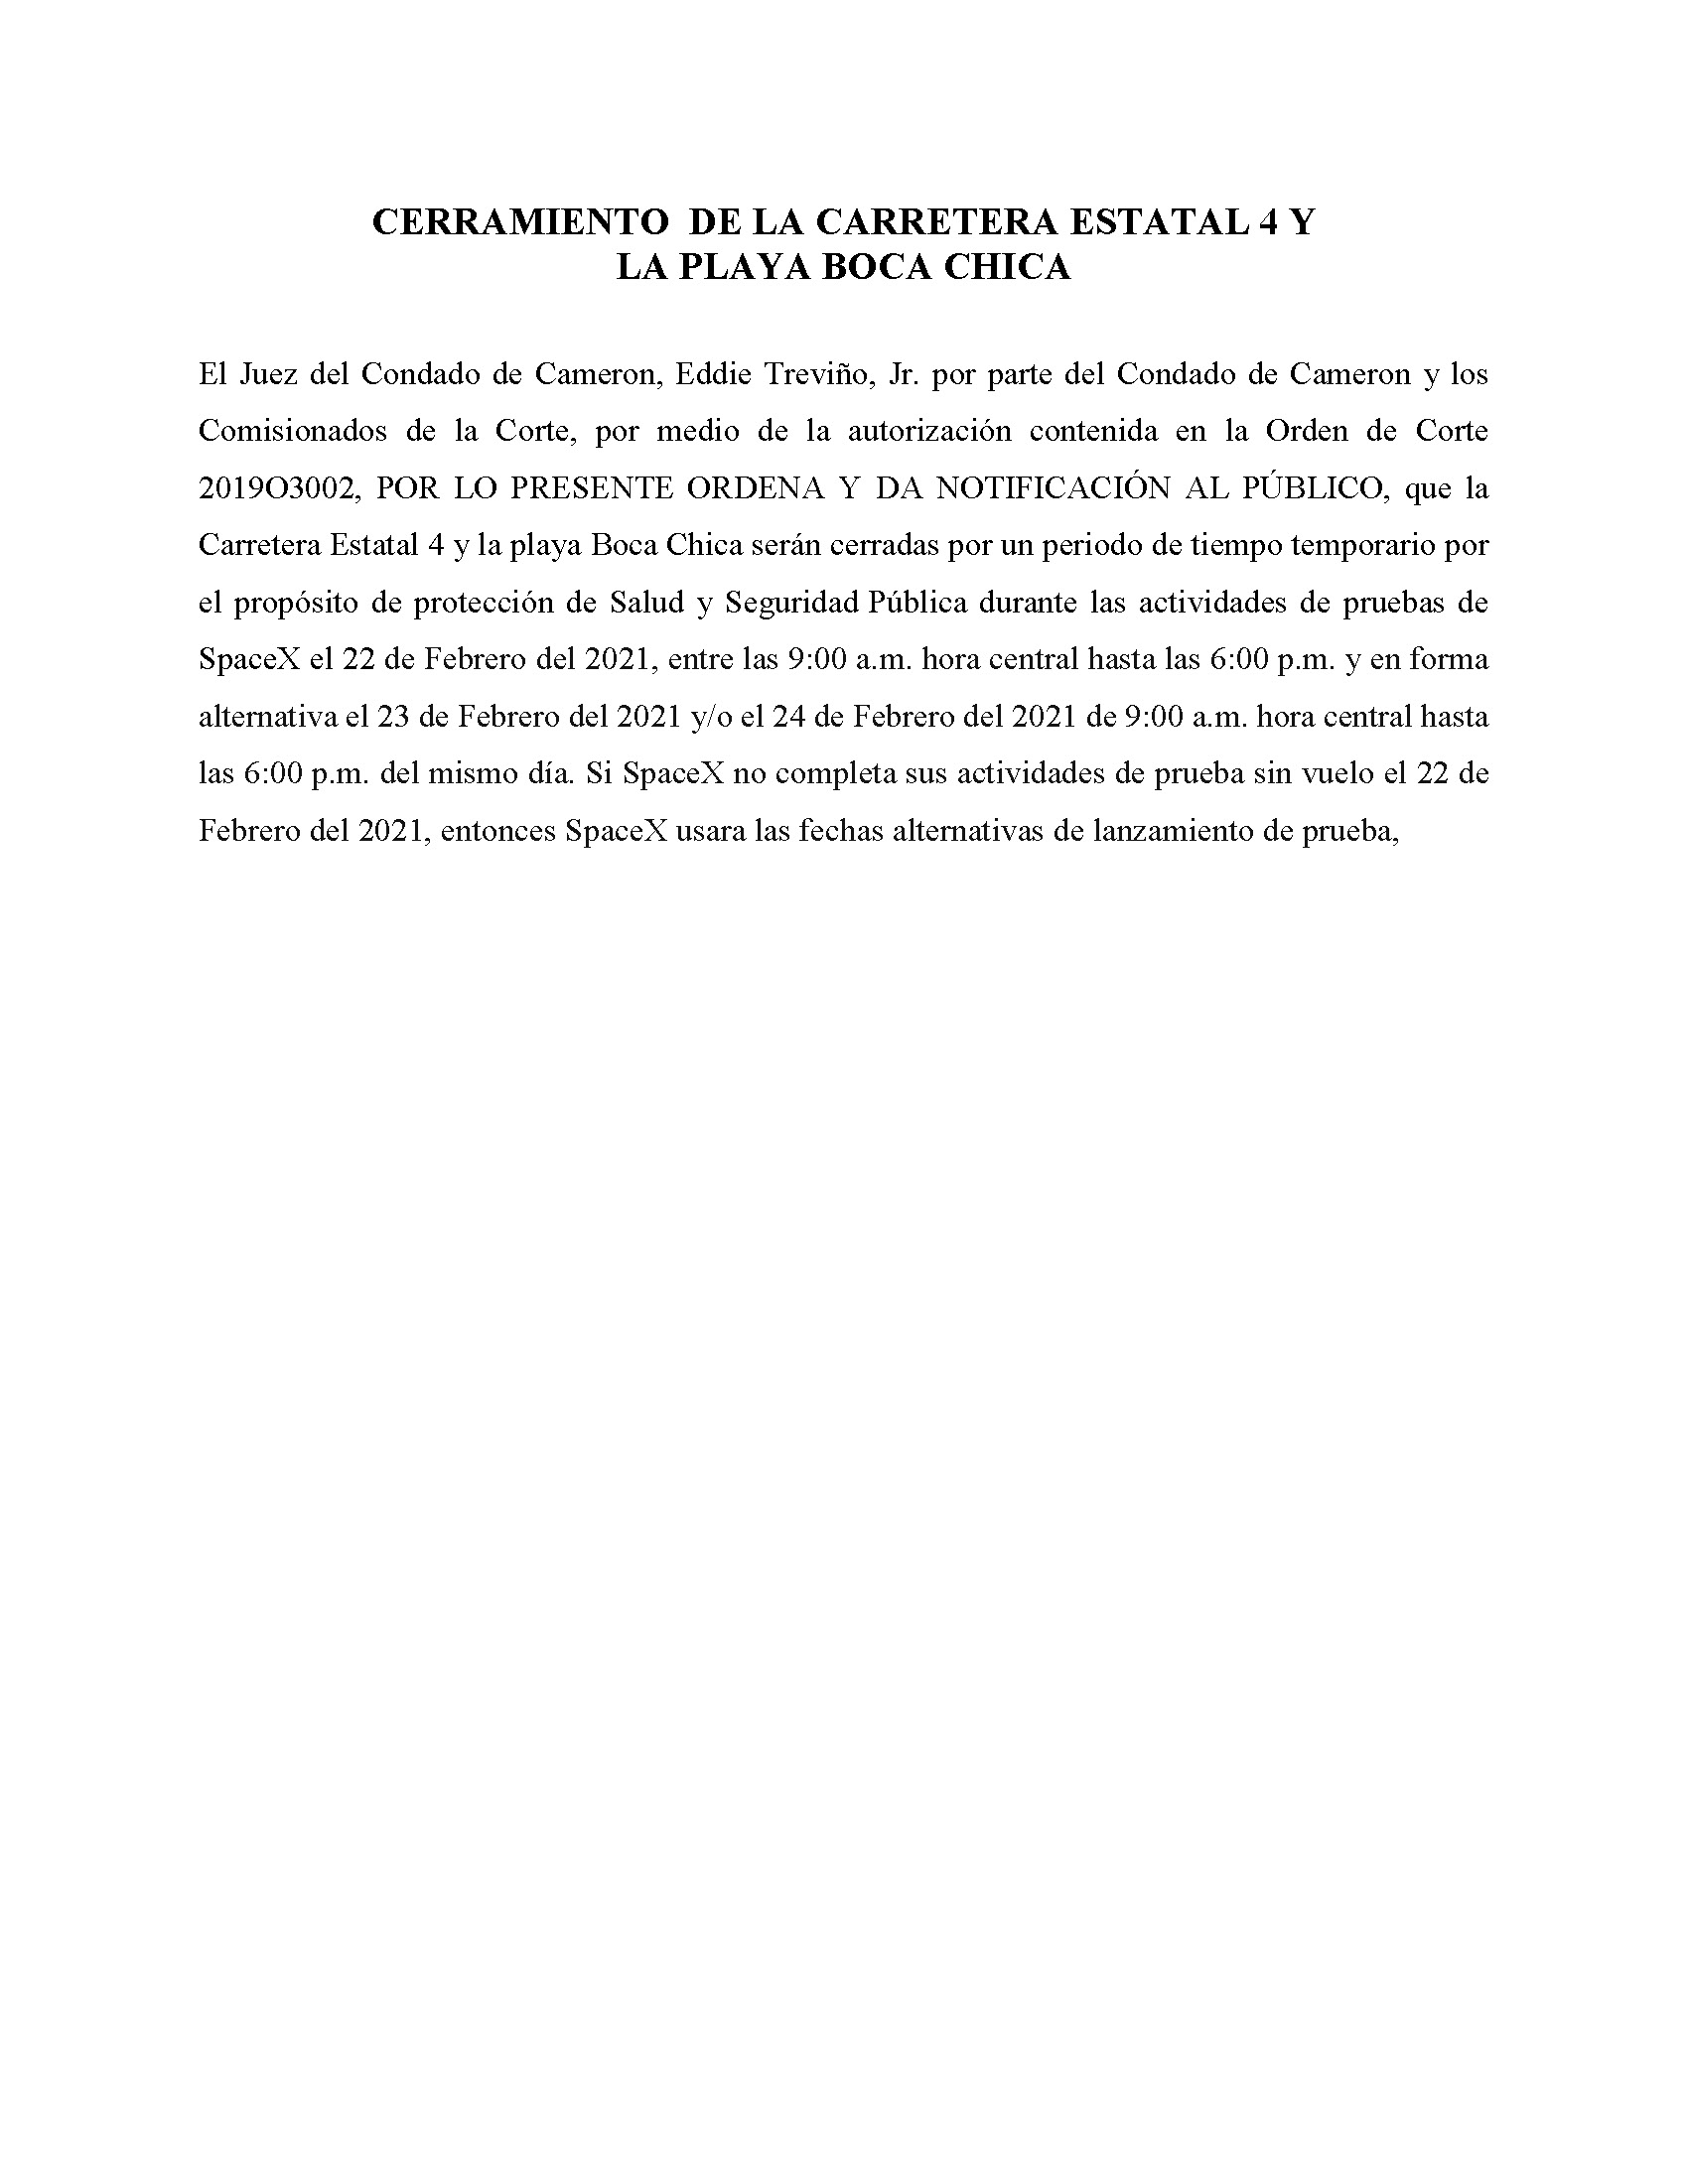 ORDER.CLOSURE OF HIGHWAY 4 Y LA PLAYA BOCA CHICA.SPANISH.02.22.2021